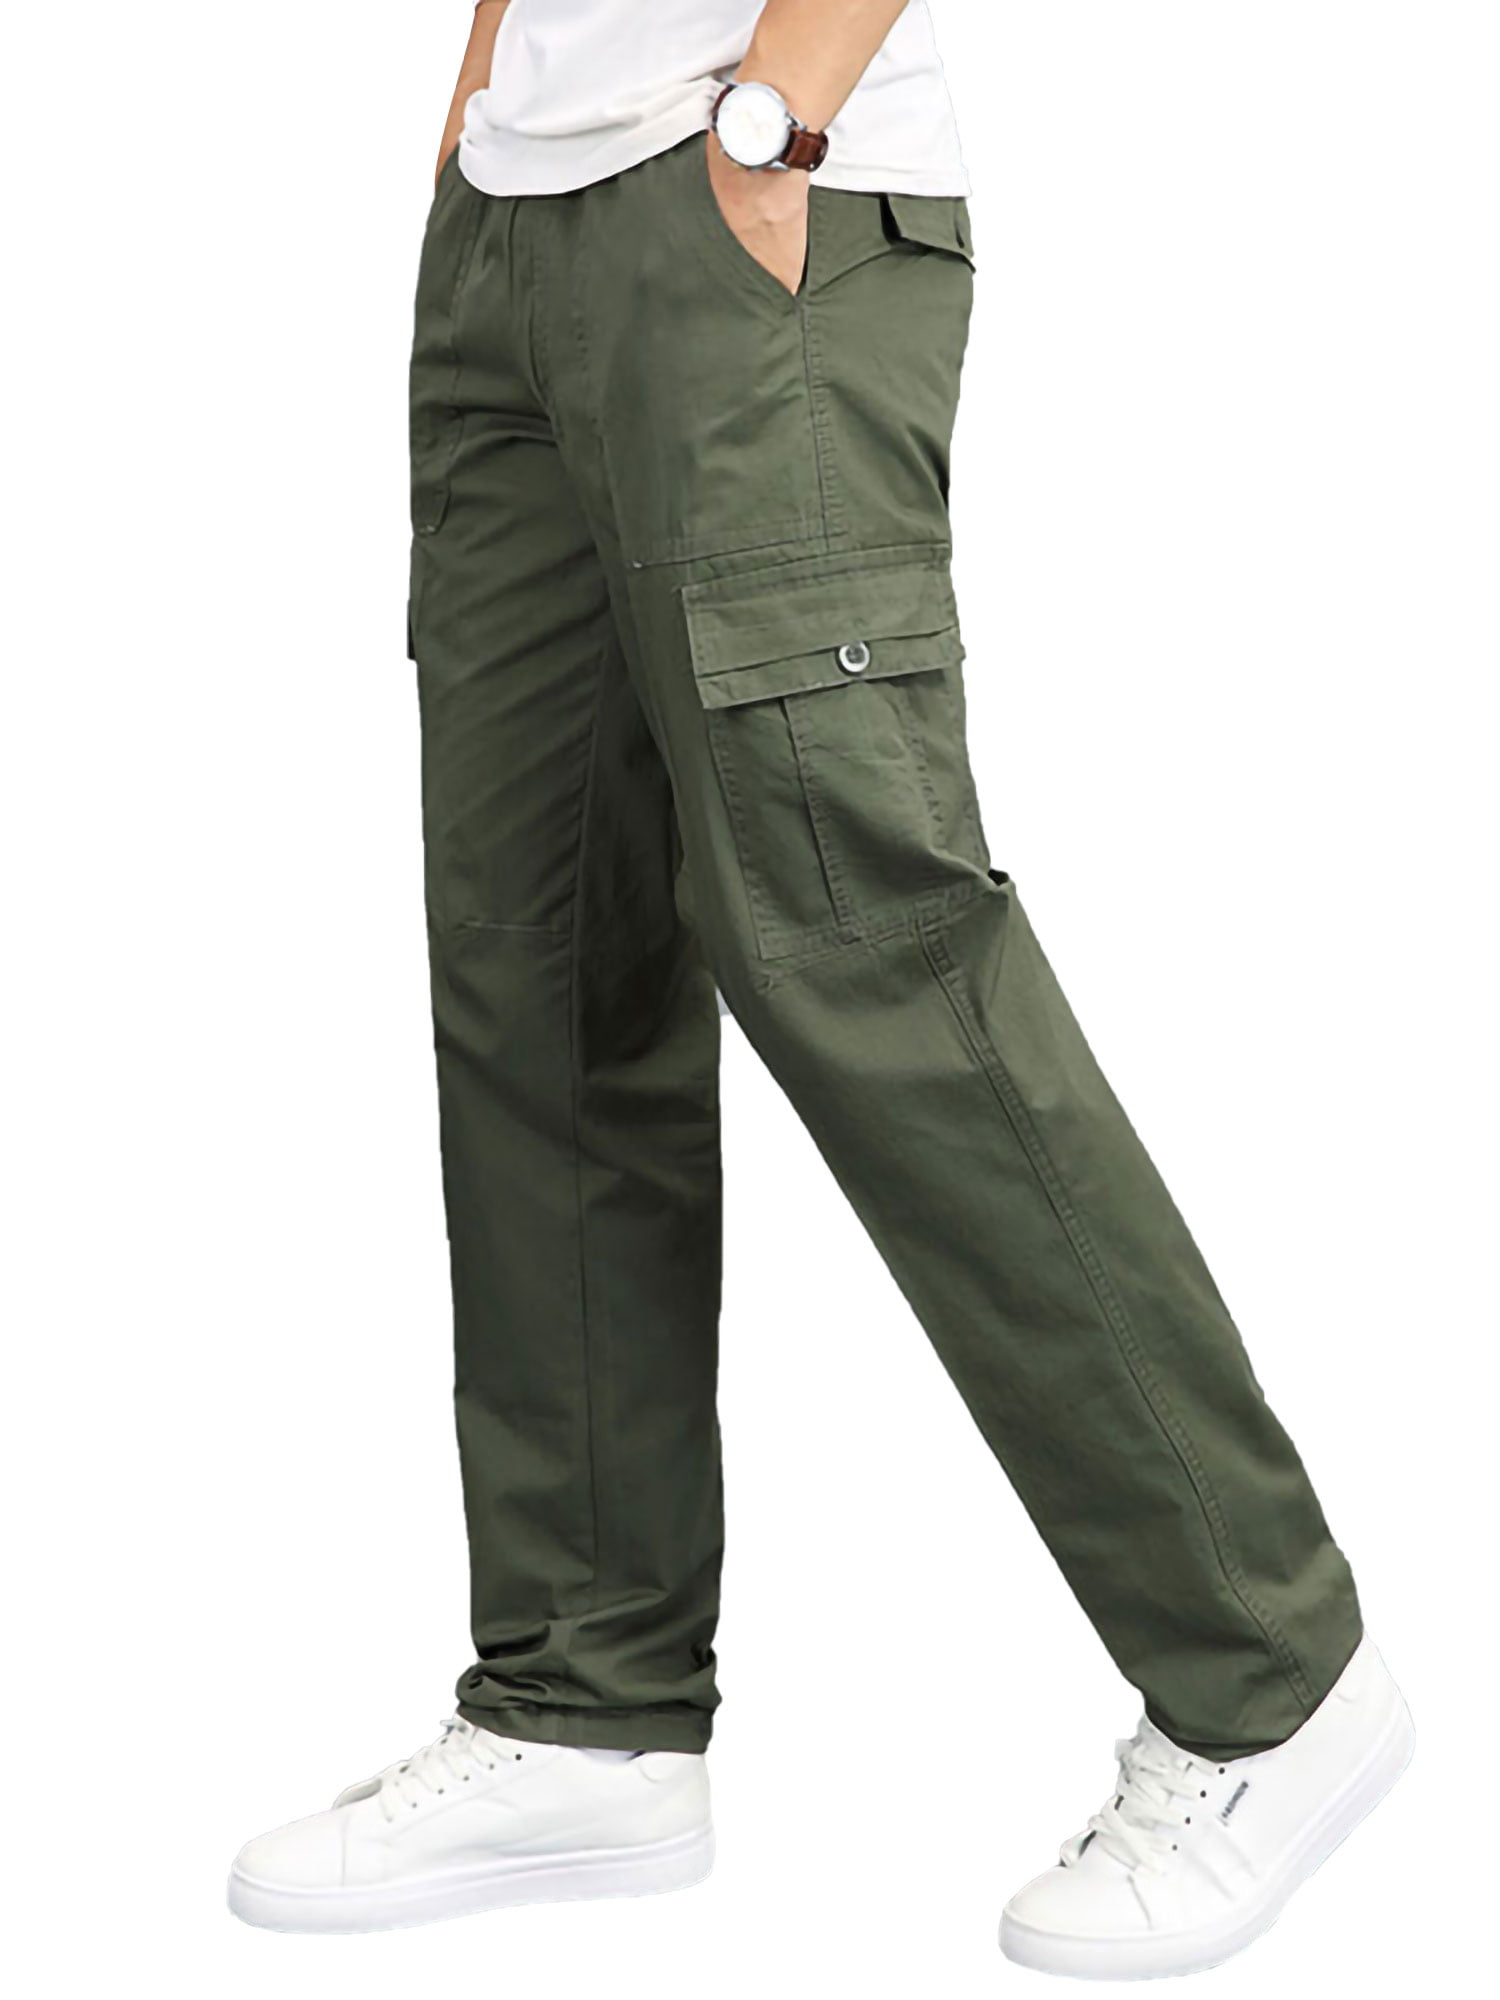 Mens Multi-Pocket Combat Tactical Pants Jogging Outdoor Cargo Work Long Trousers 